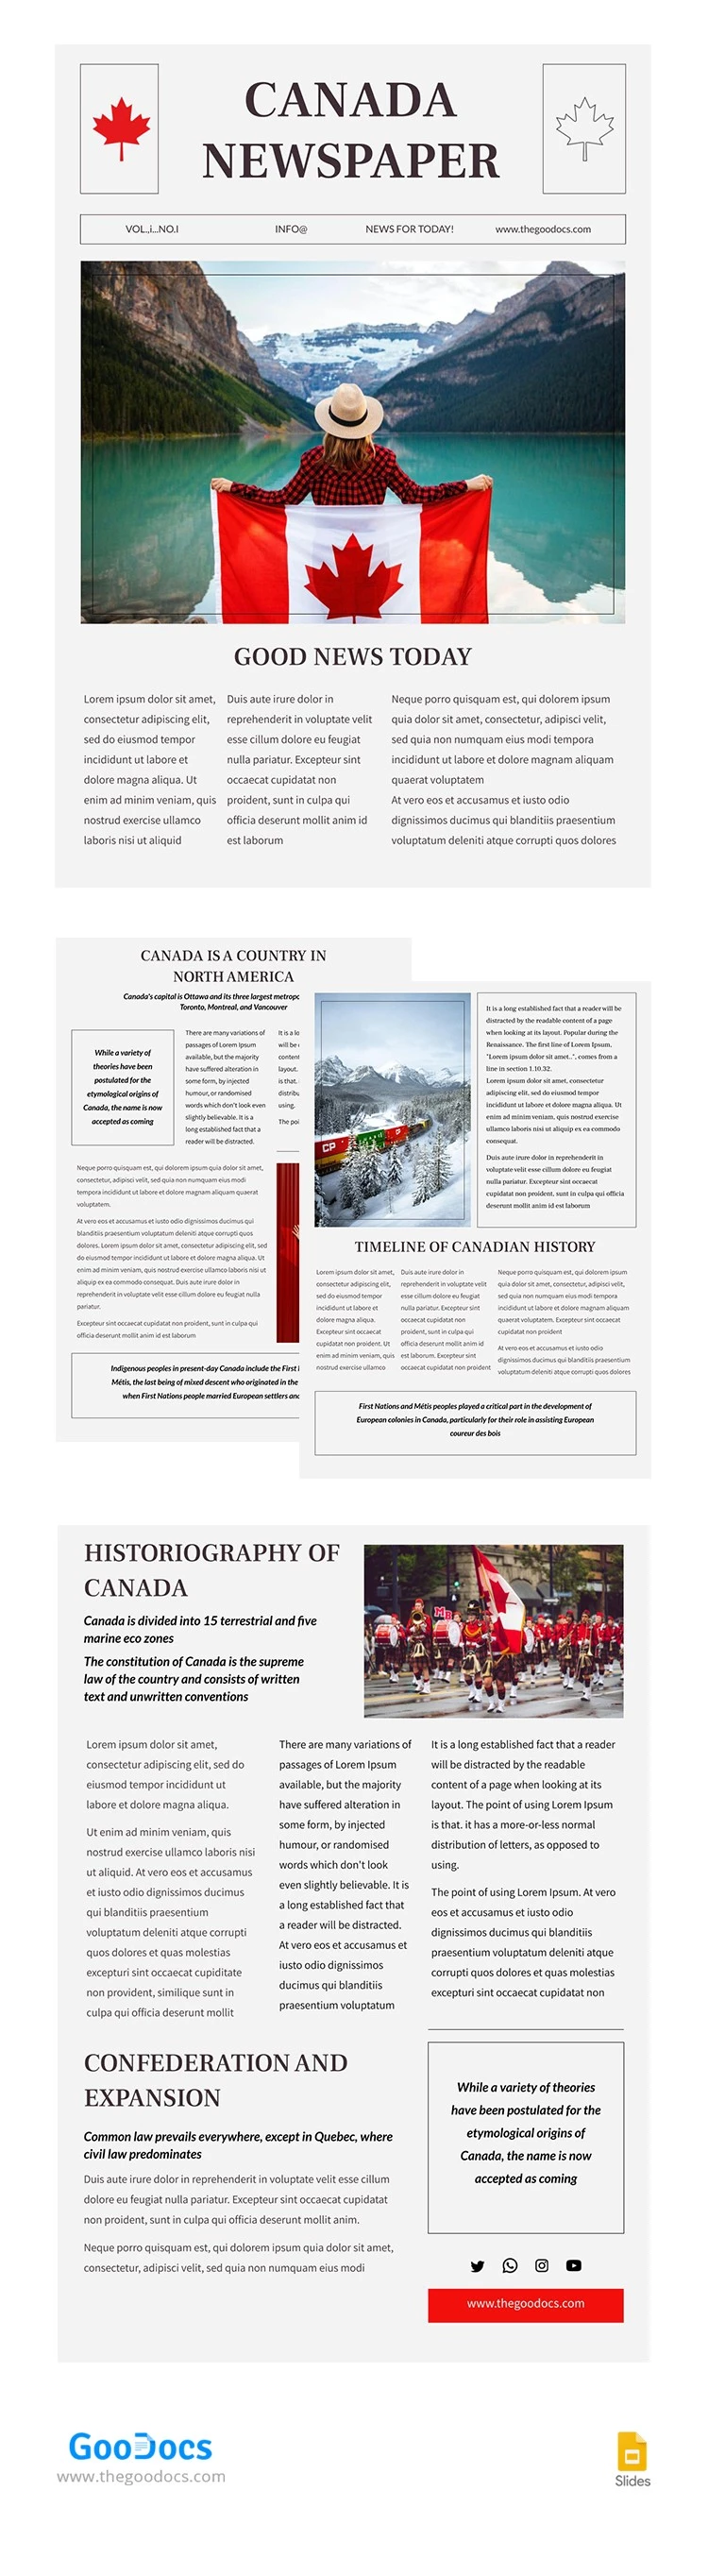 Jornal do Canadá - free Google Docs Template - 10065739